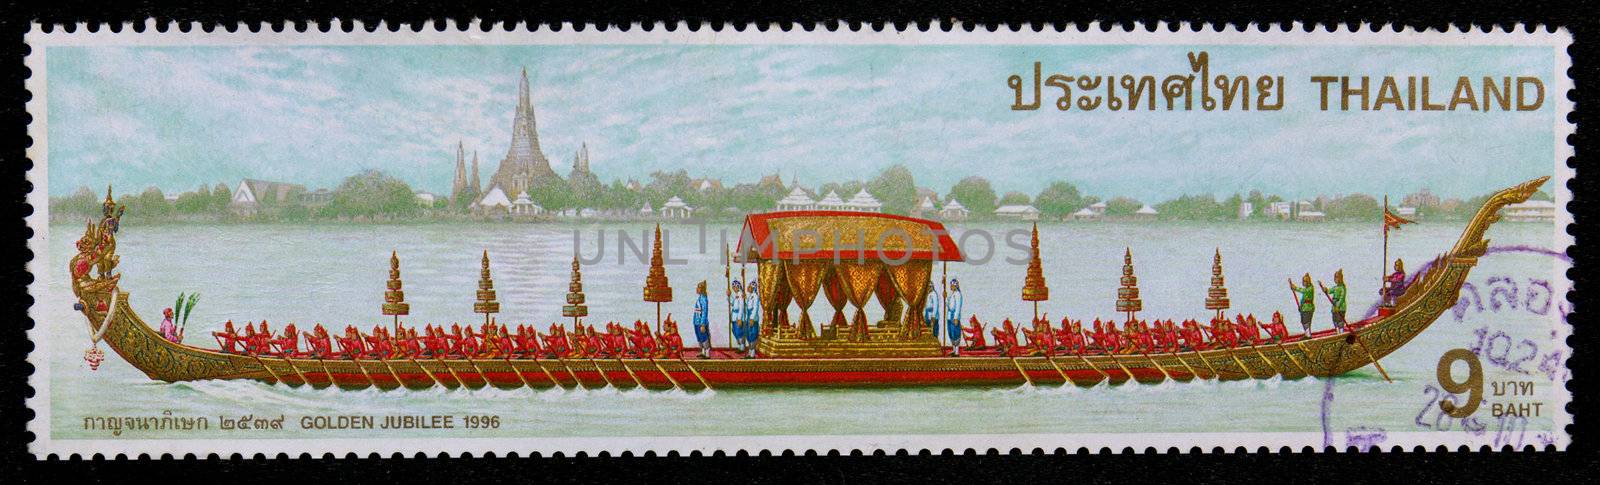 Stamp  printed in Thailand by stoonn